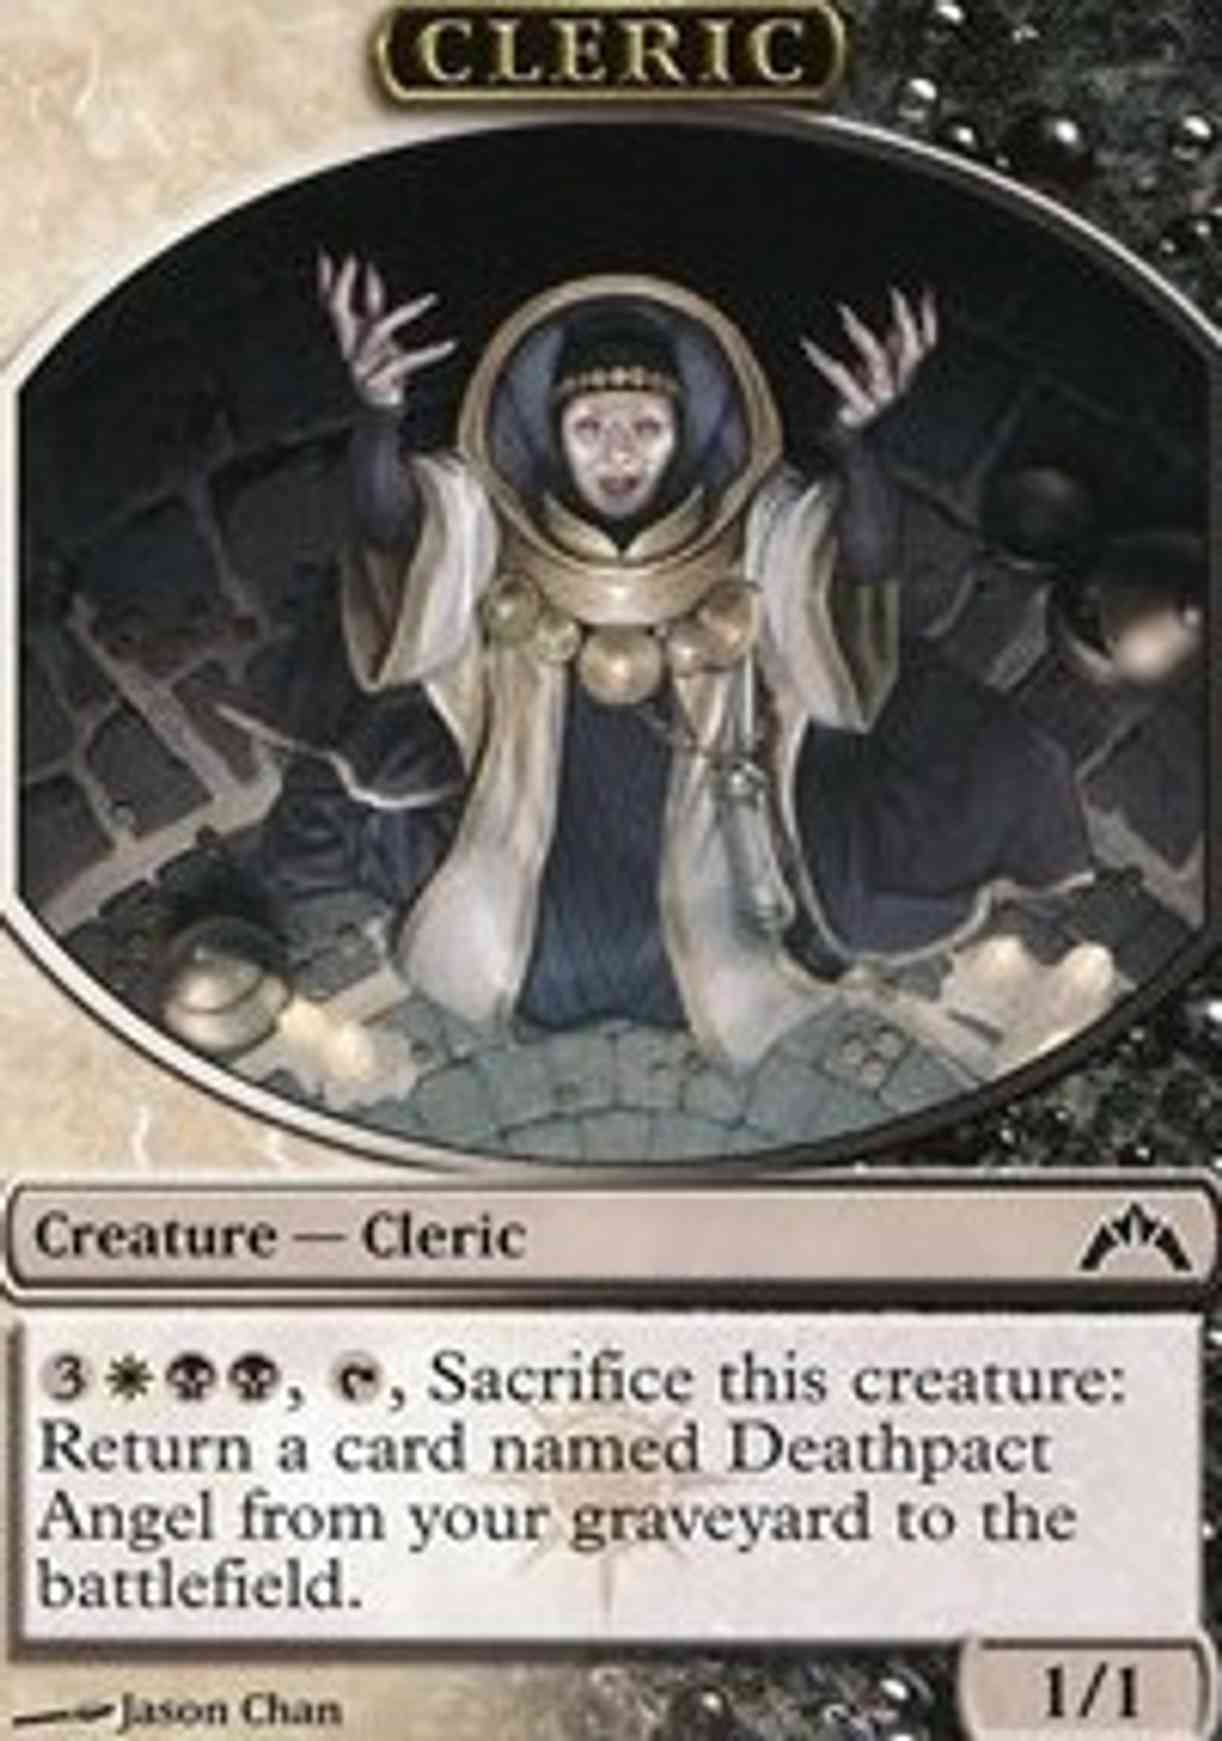 Cleric Token magic card front